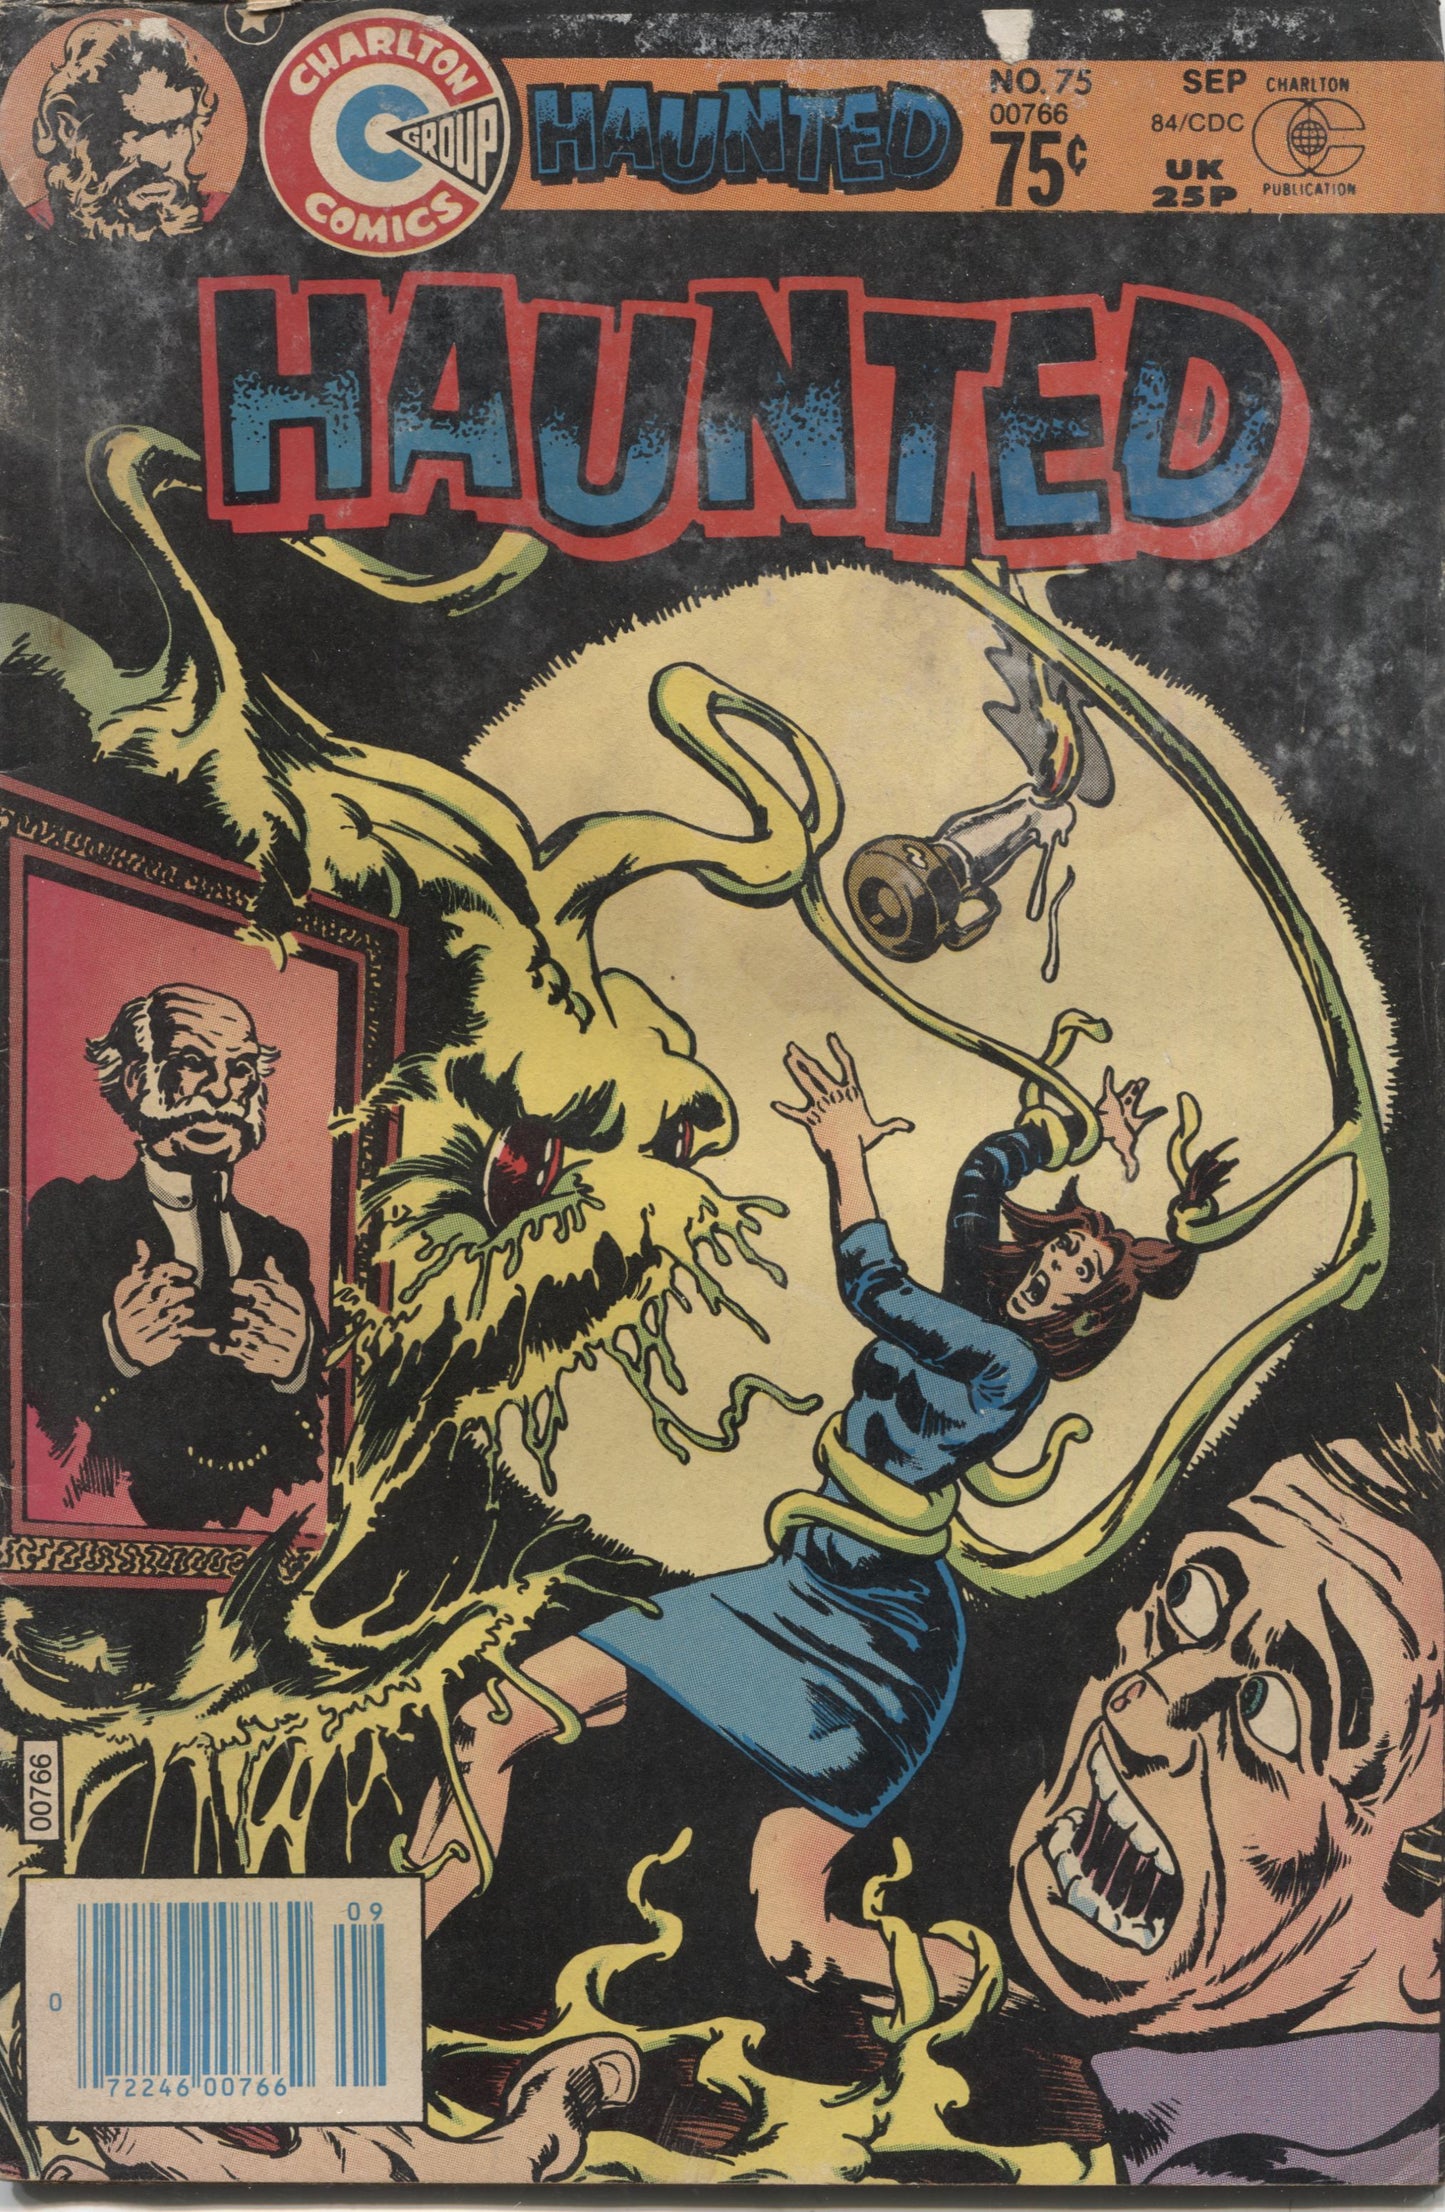 Haunted No. 75, "The Elevator," Charlton Comics, September 1984